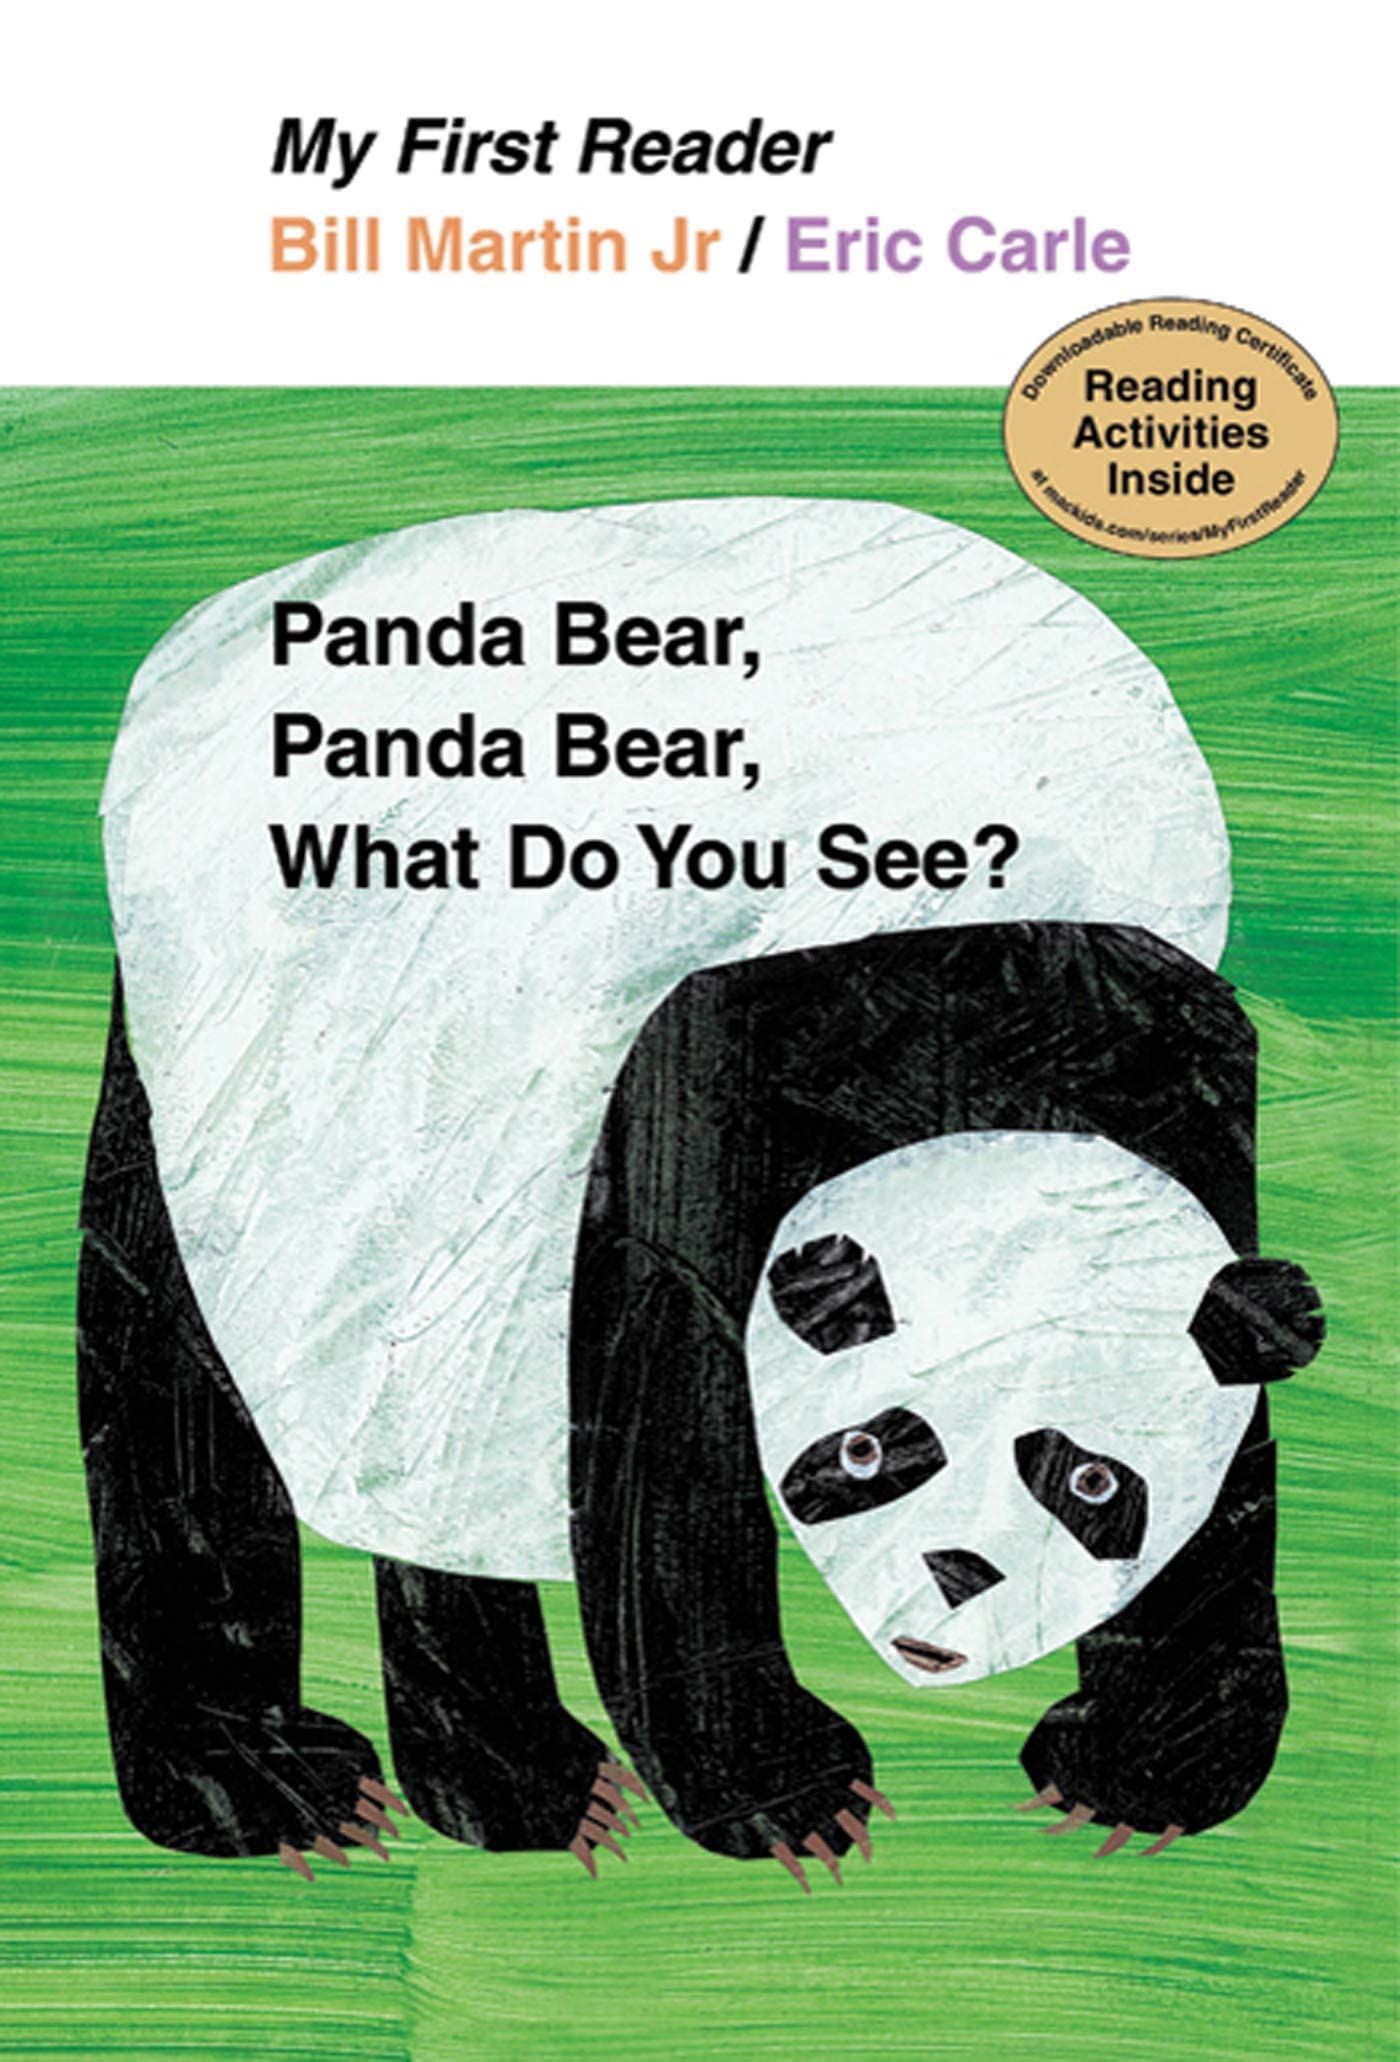 My First Reader : Panda Bear, Panda Bear, What Do You See? - Bill Martin Jr